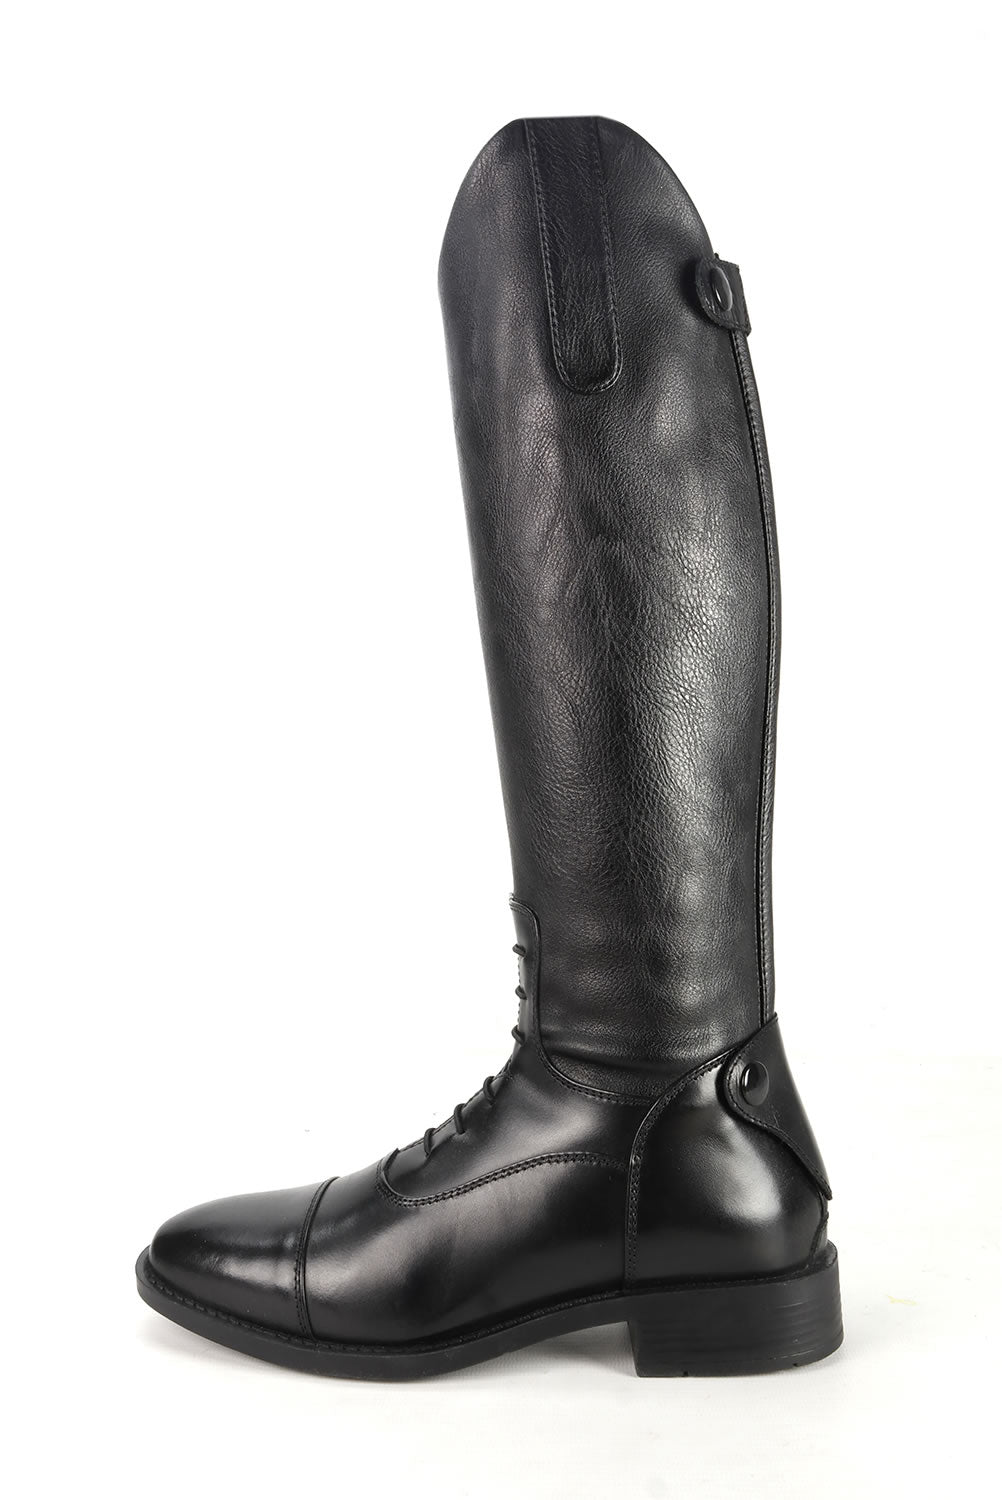 Brogini Como Piccino YR Boots Childs - Size 38